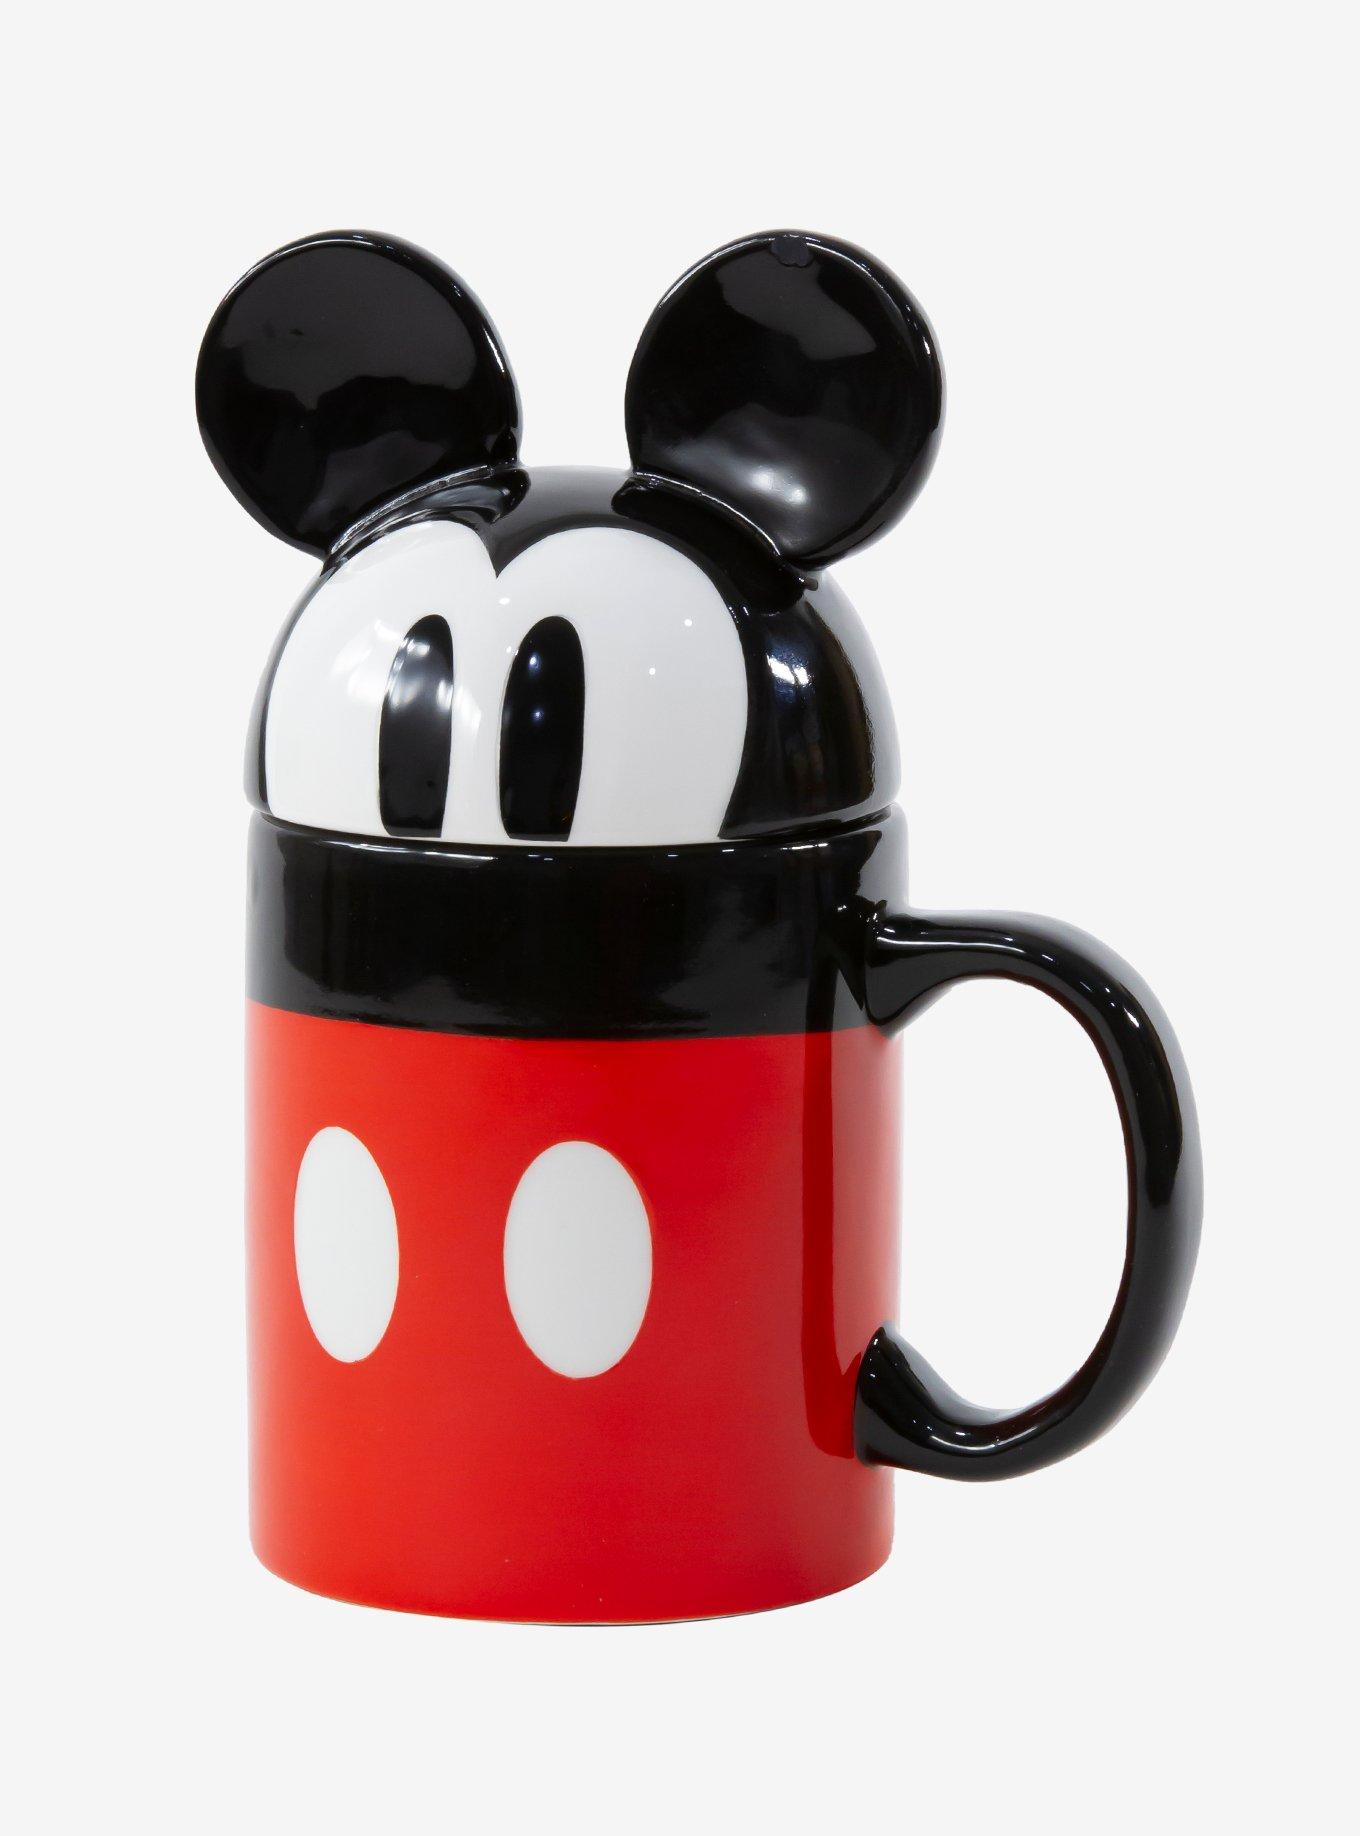 Disney Mickey Mouse Coffee Mug Warmer Review 